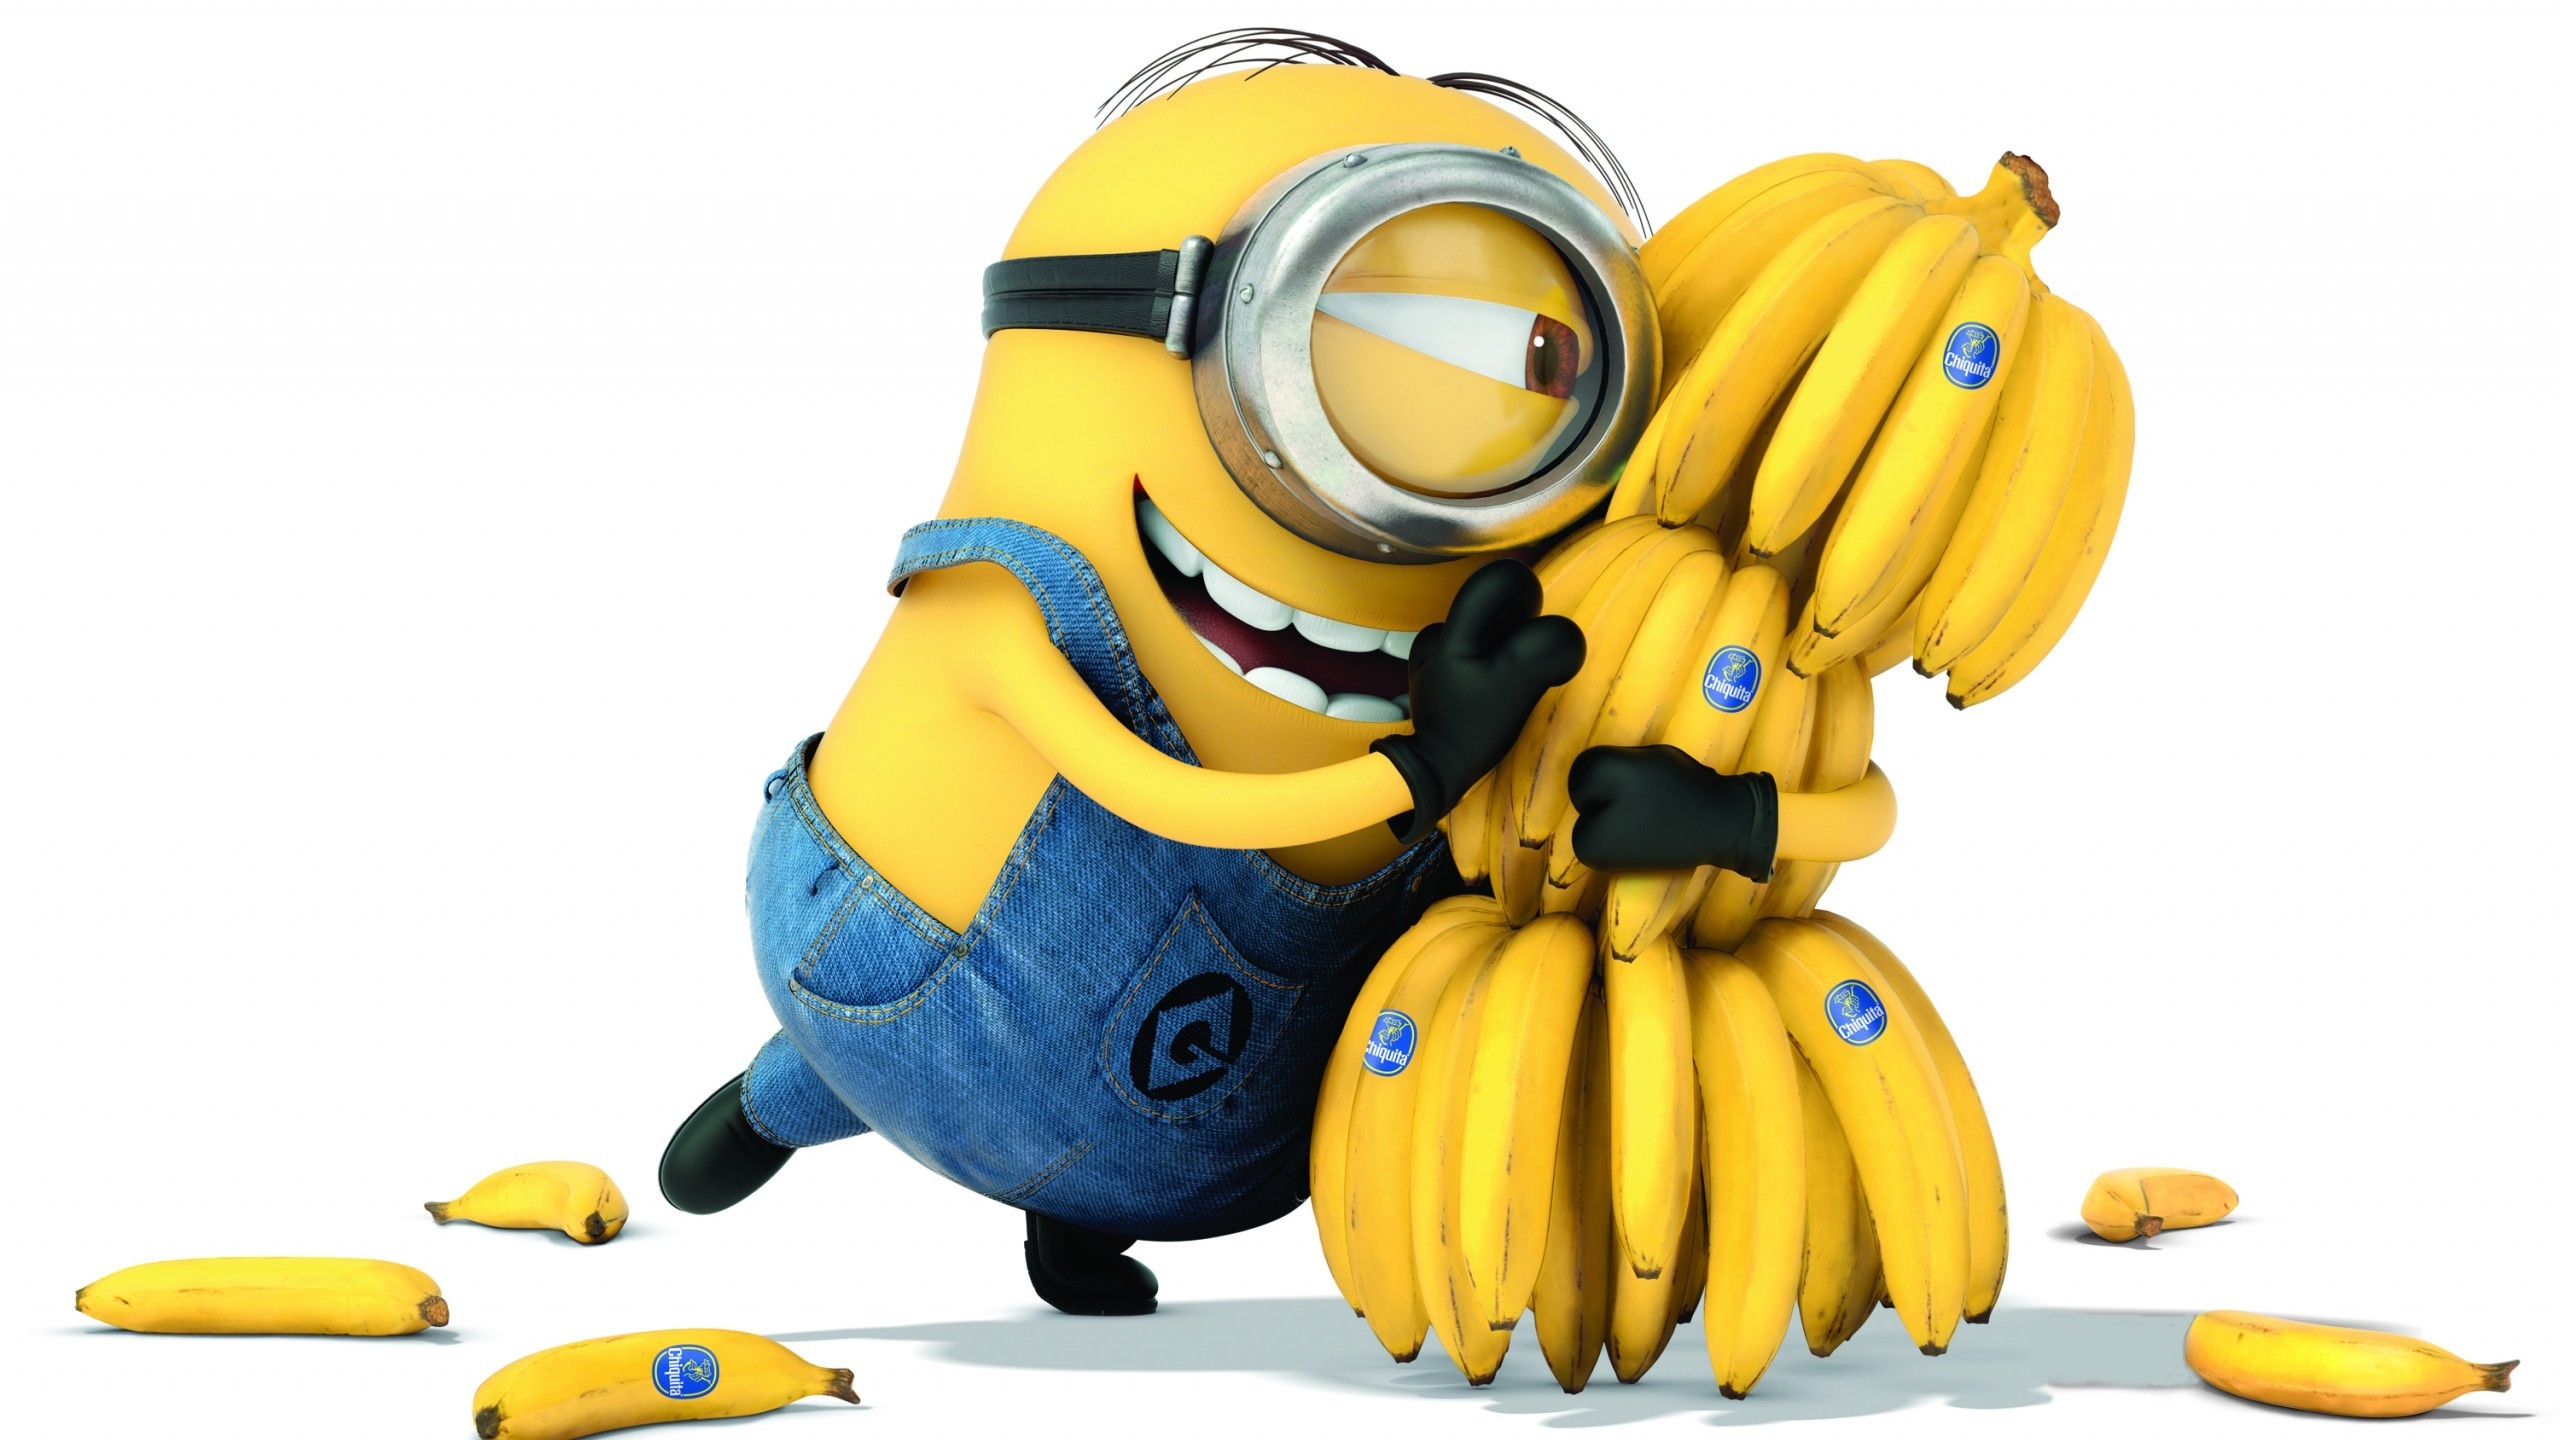 Despicable Me 2 Banana Love for 2560x1440 HDTV resolution